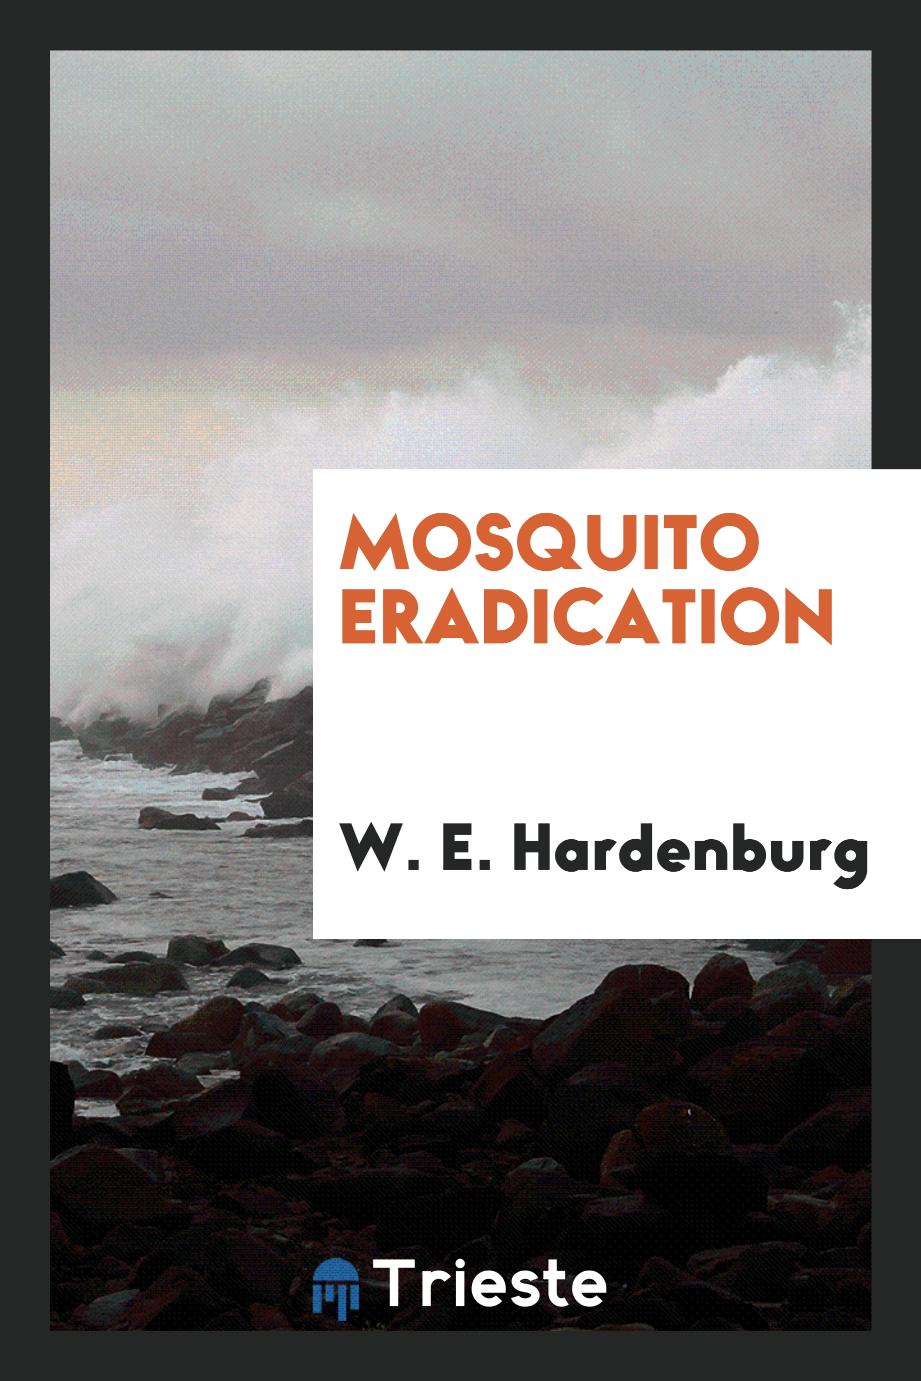 Mosquito eradication